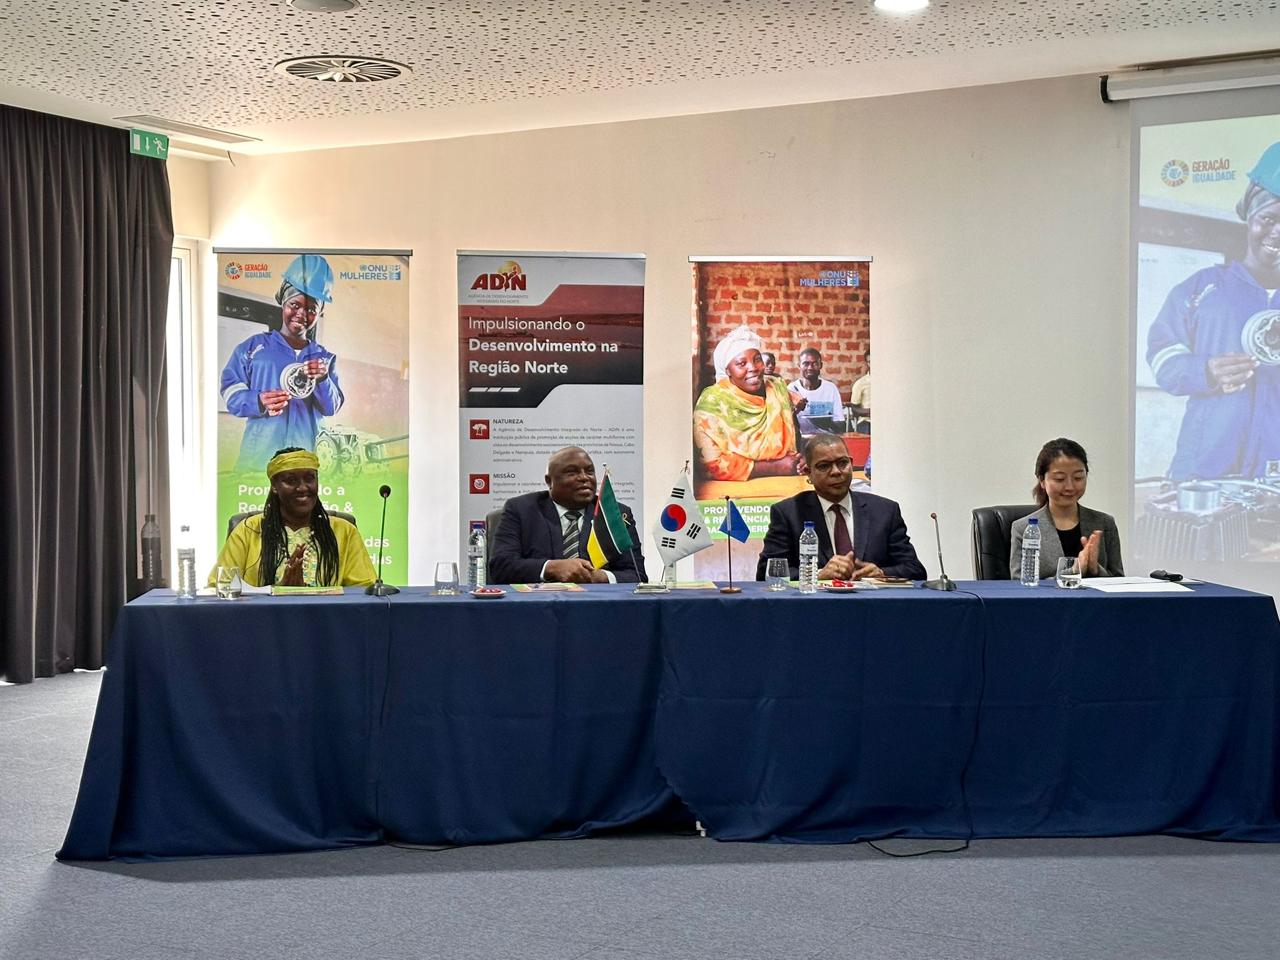 Picture 1: From right to left: Representative of UN Women Mozambique (Marie Laetitia Kayisire), President of ADIN (Jacinto Lapido Loureiro), Secretary of State for Cabo Delgado Province (Njanje Taímo Supeia) and Deputy Director of KOICA - Mozambique (Gyeong-jin Noh).